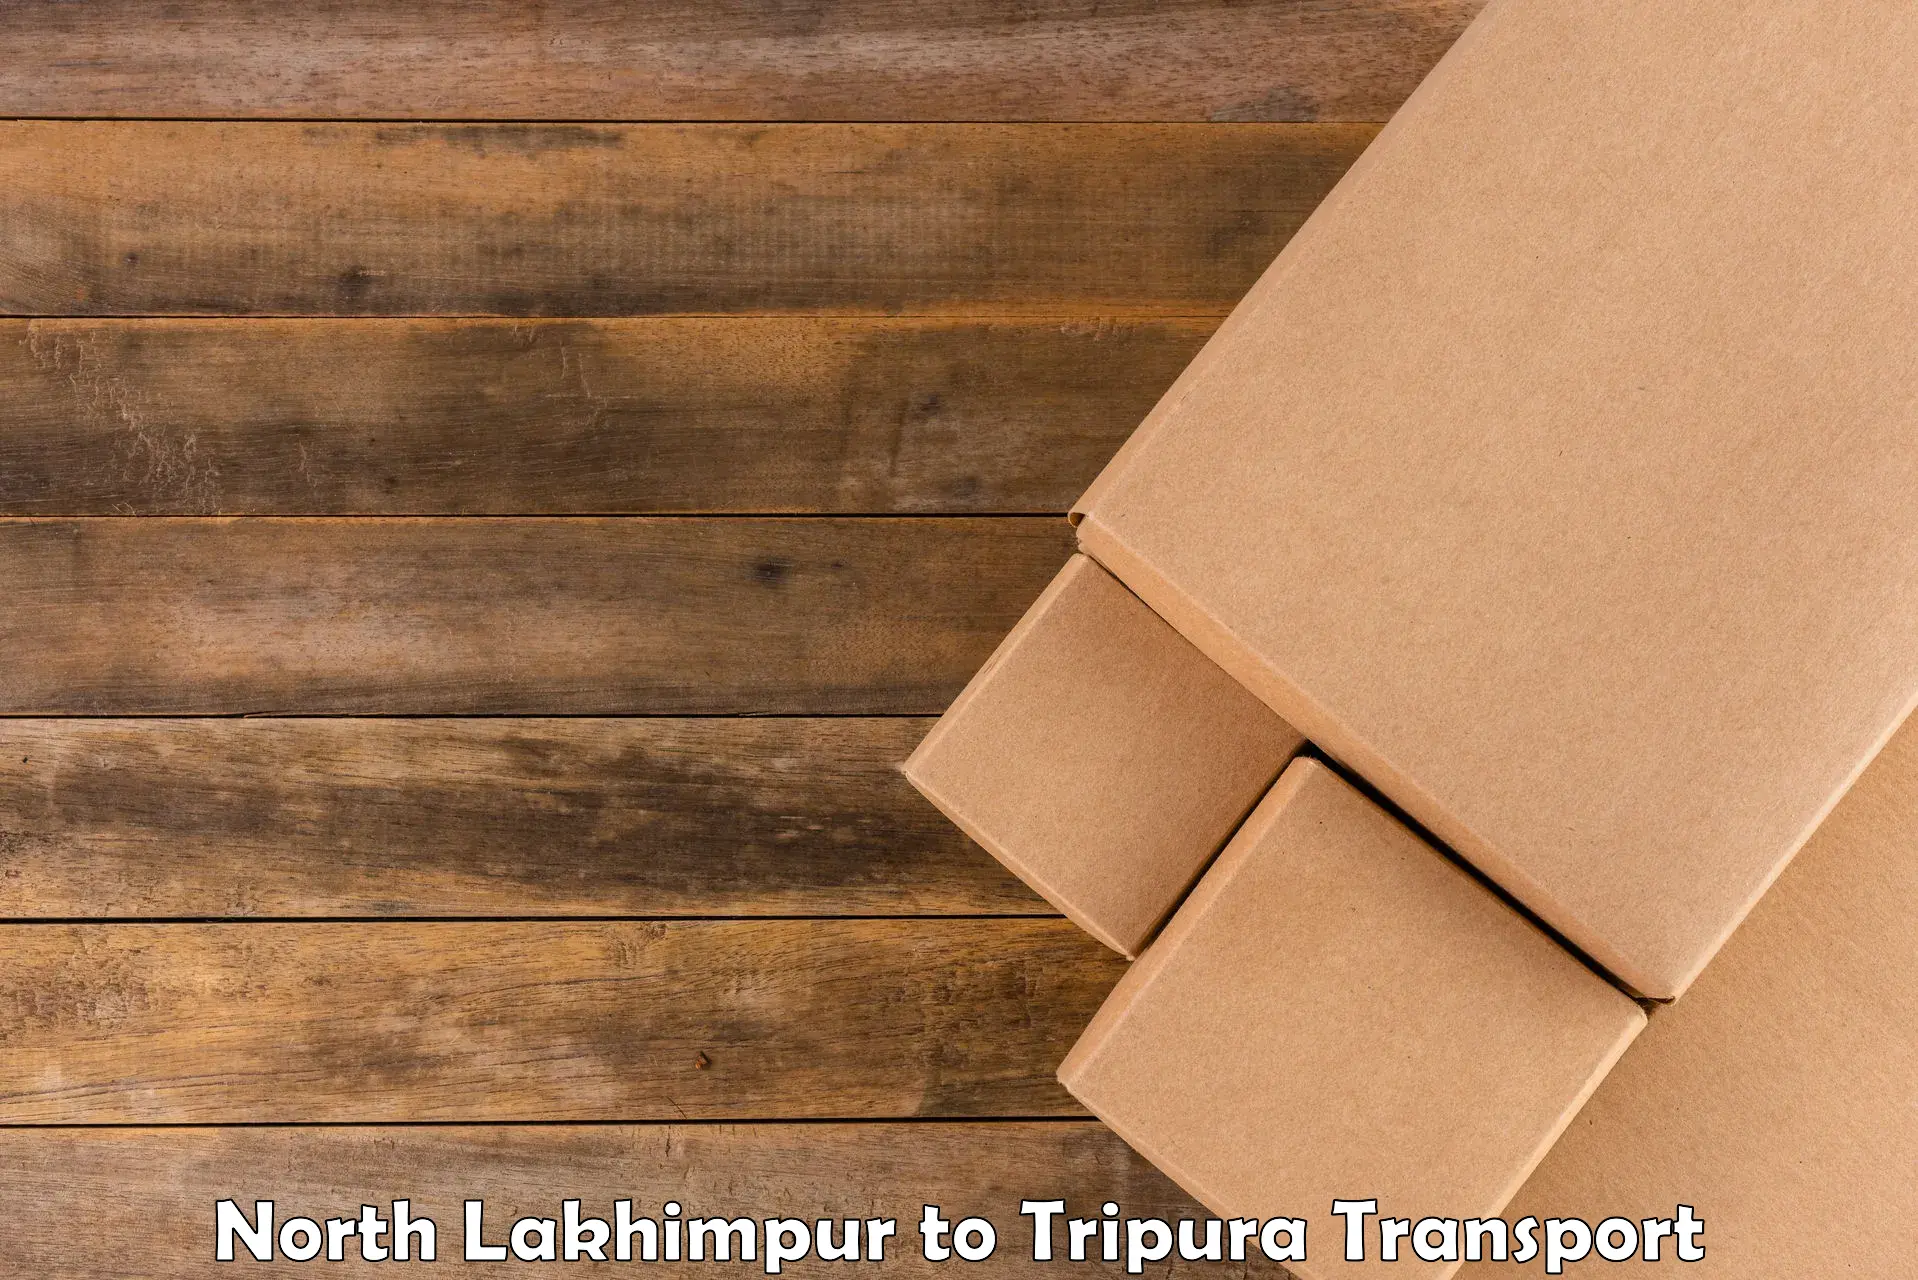 Nearest transport service North Lakhimpur to Udaipur Tripura